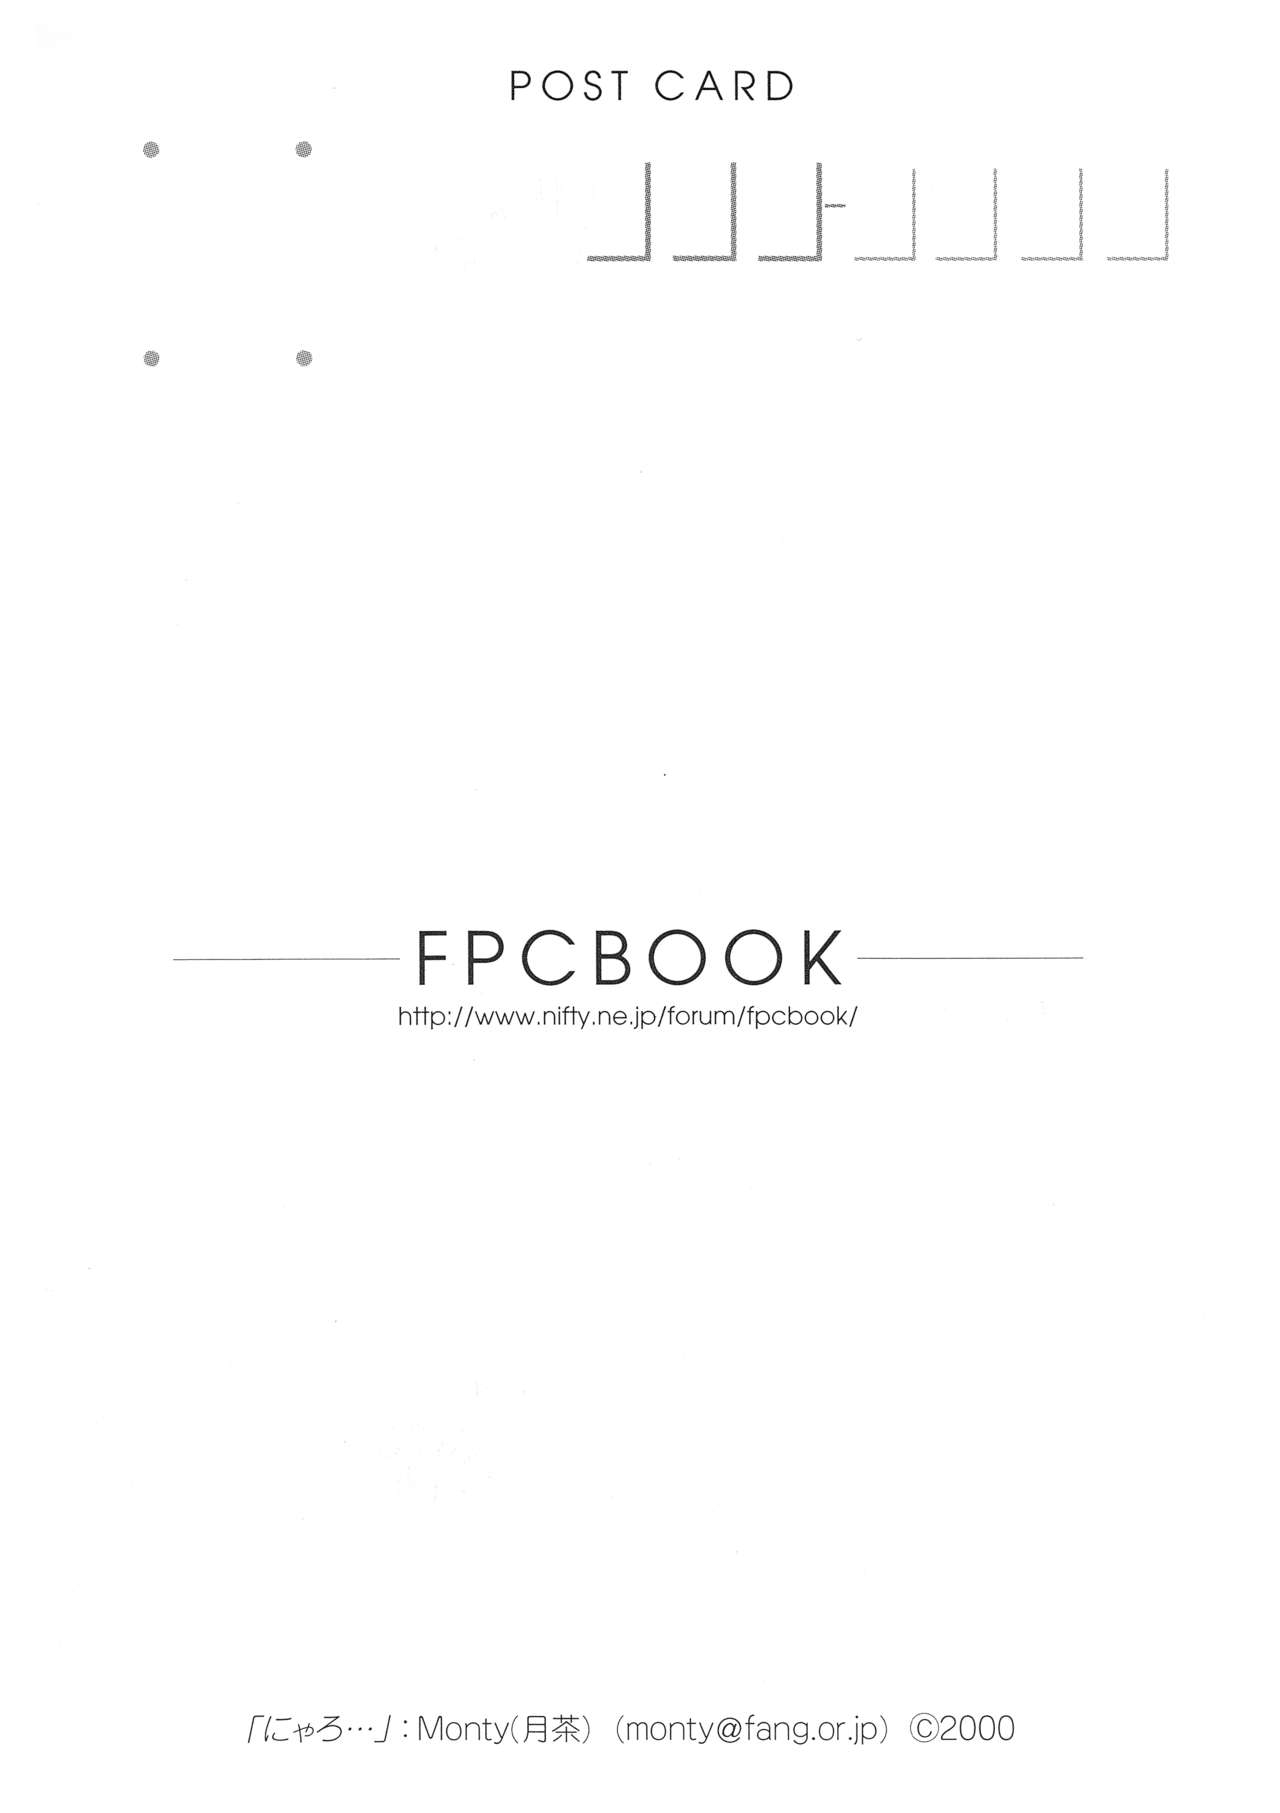 (C58) [Pasokon no Hon Forum] FPCBOOK POSTCARD BOOK 2000 11